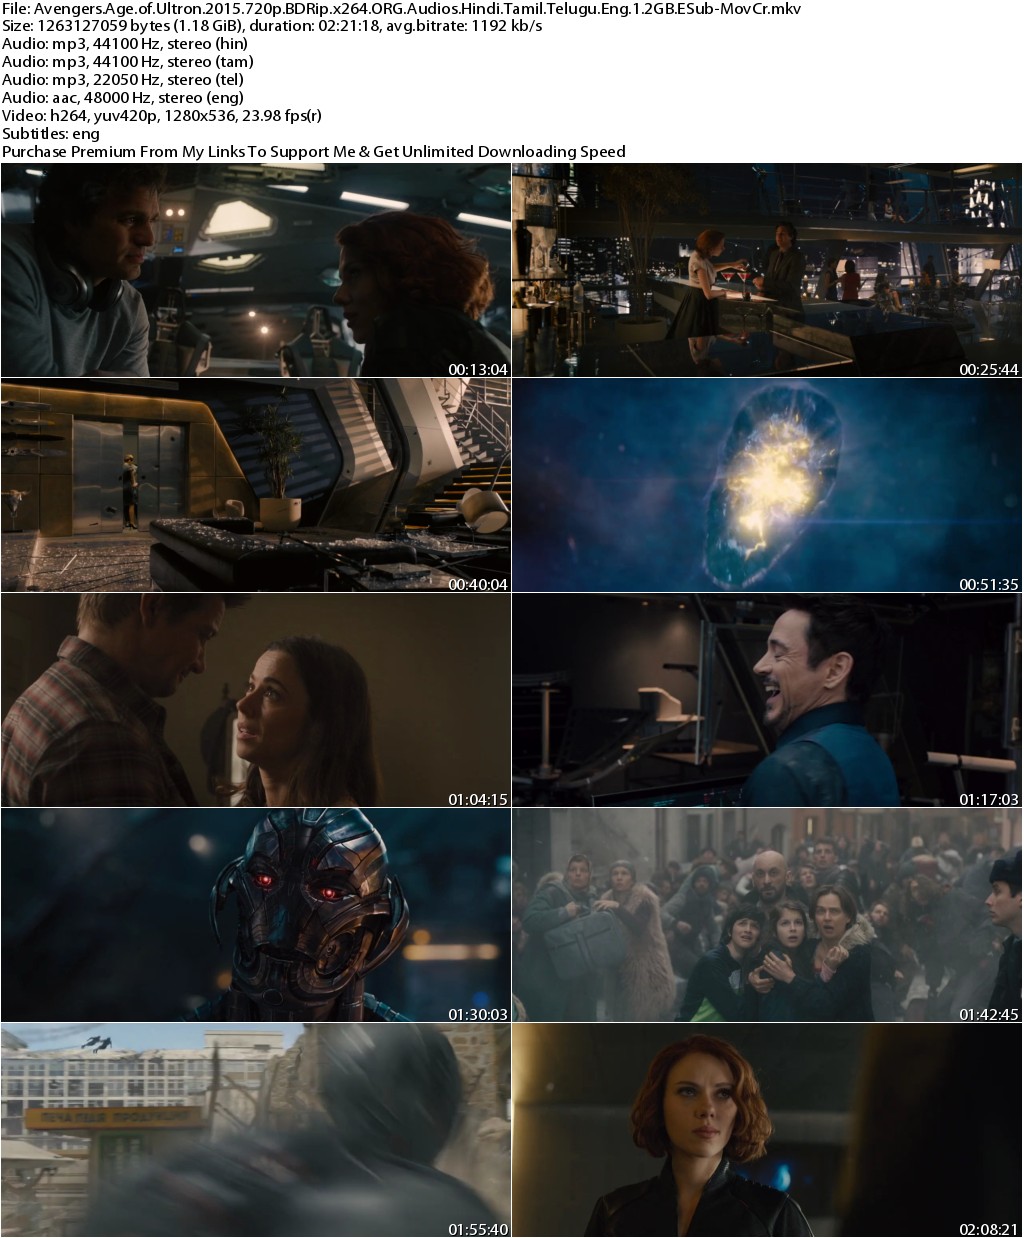 Avengers Age of Ultron (2015) 720p BDRip x264 ORG Audios Hindi Tamil Telugu Eng 1.2GB ESub-MovCr